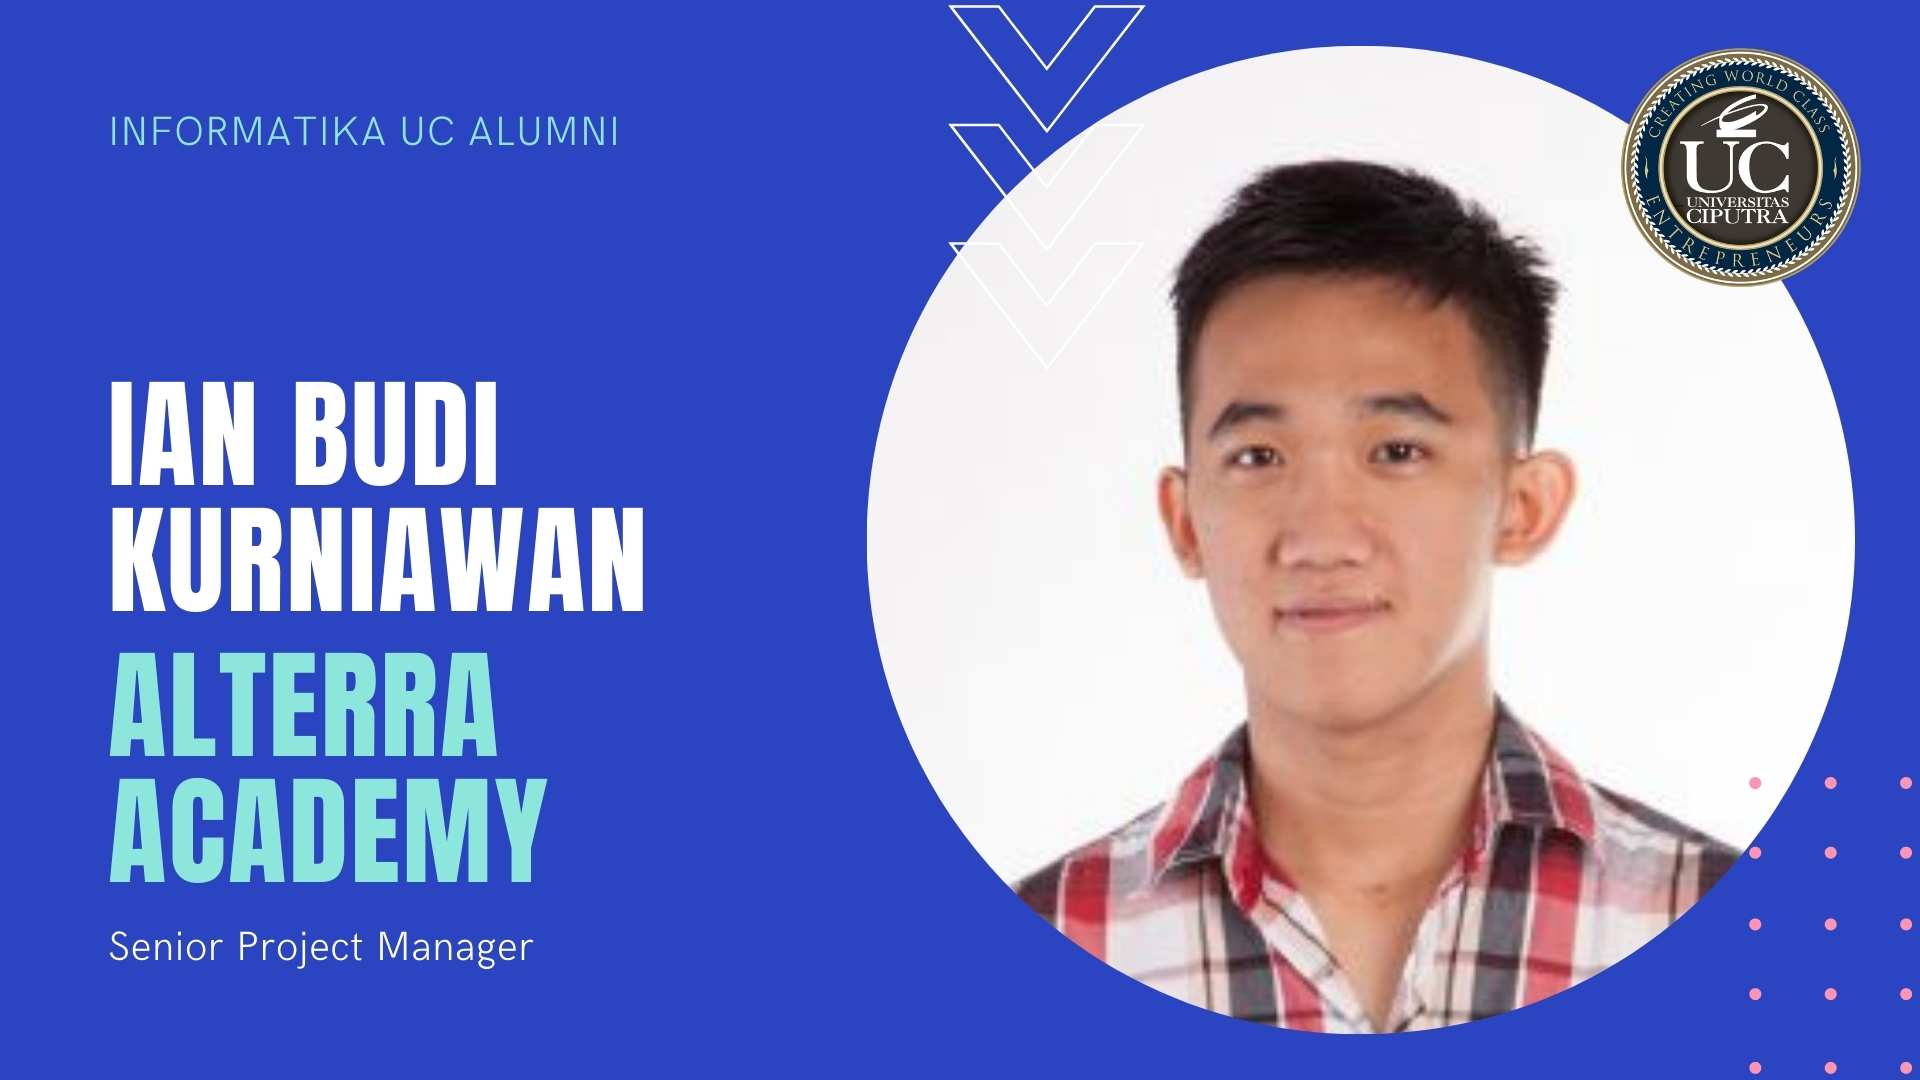 Ian Budi Kurniawan, Alterra Academy - Senior Project Manager